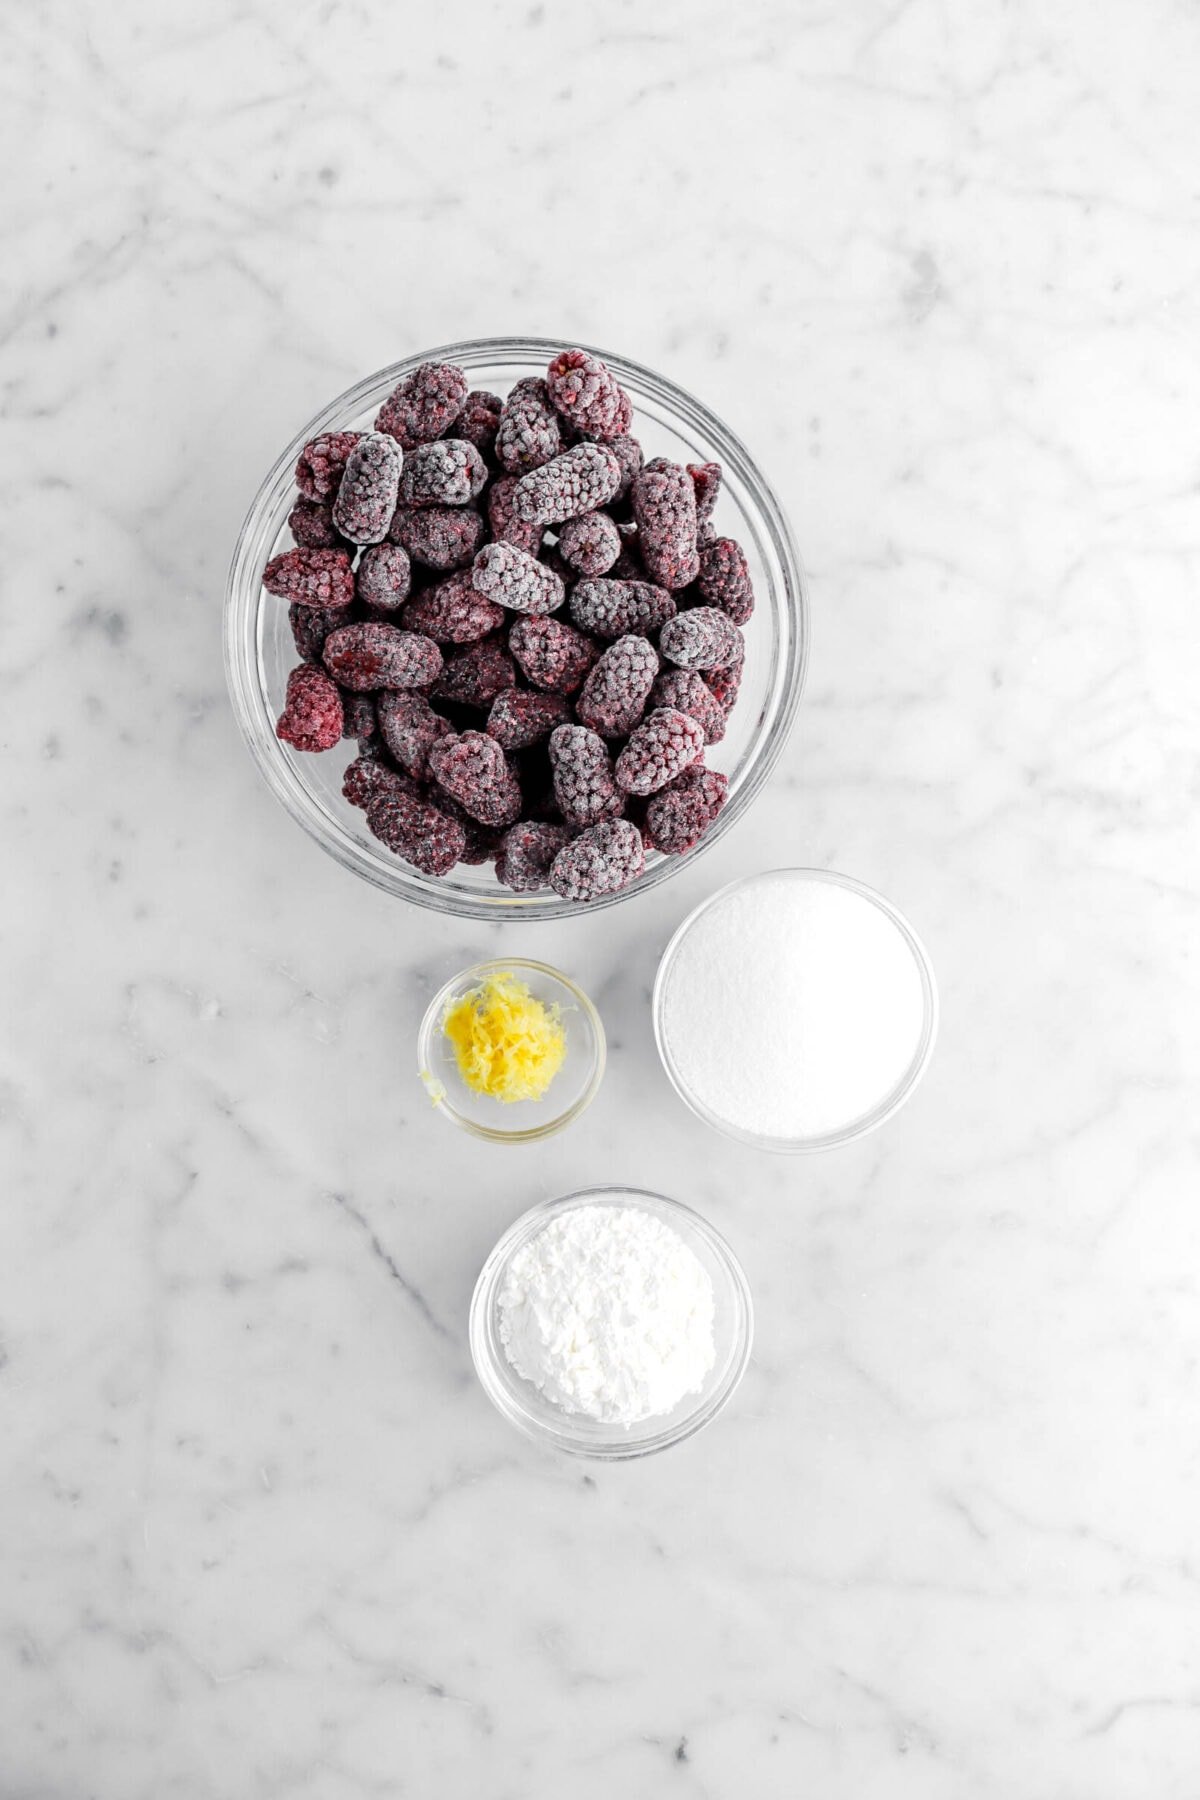 frozen blackberries, lemon zest, sugar, and corn starch in glass bowls on marble surface.